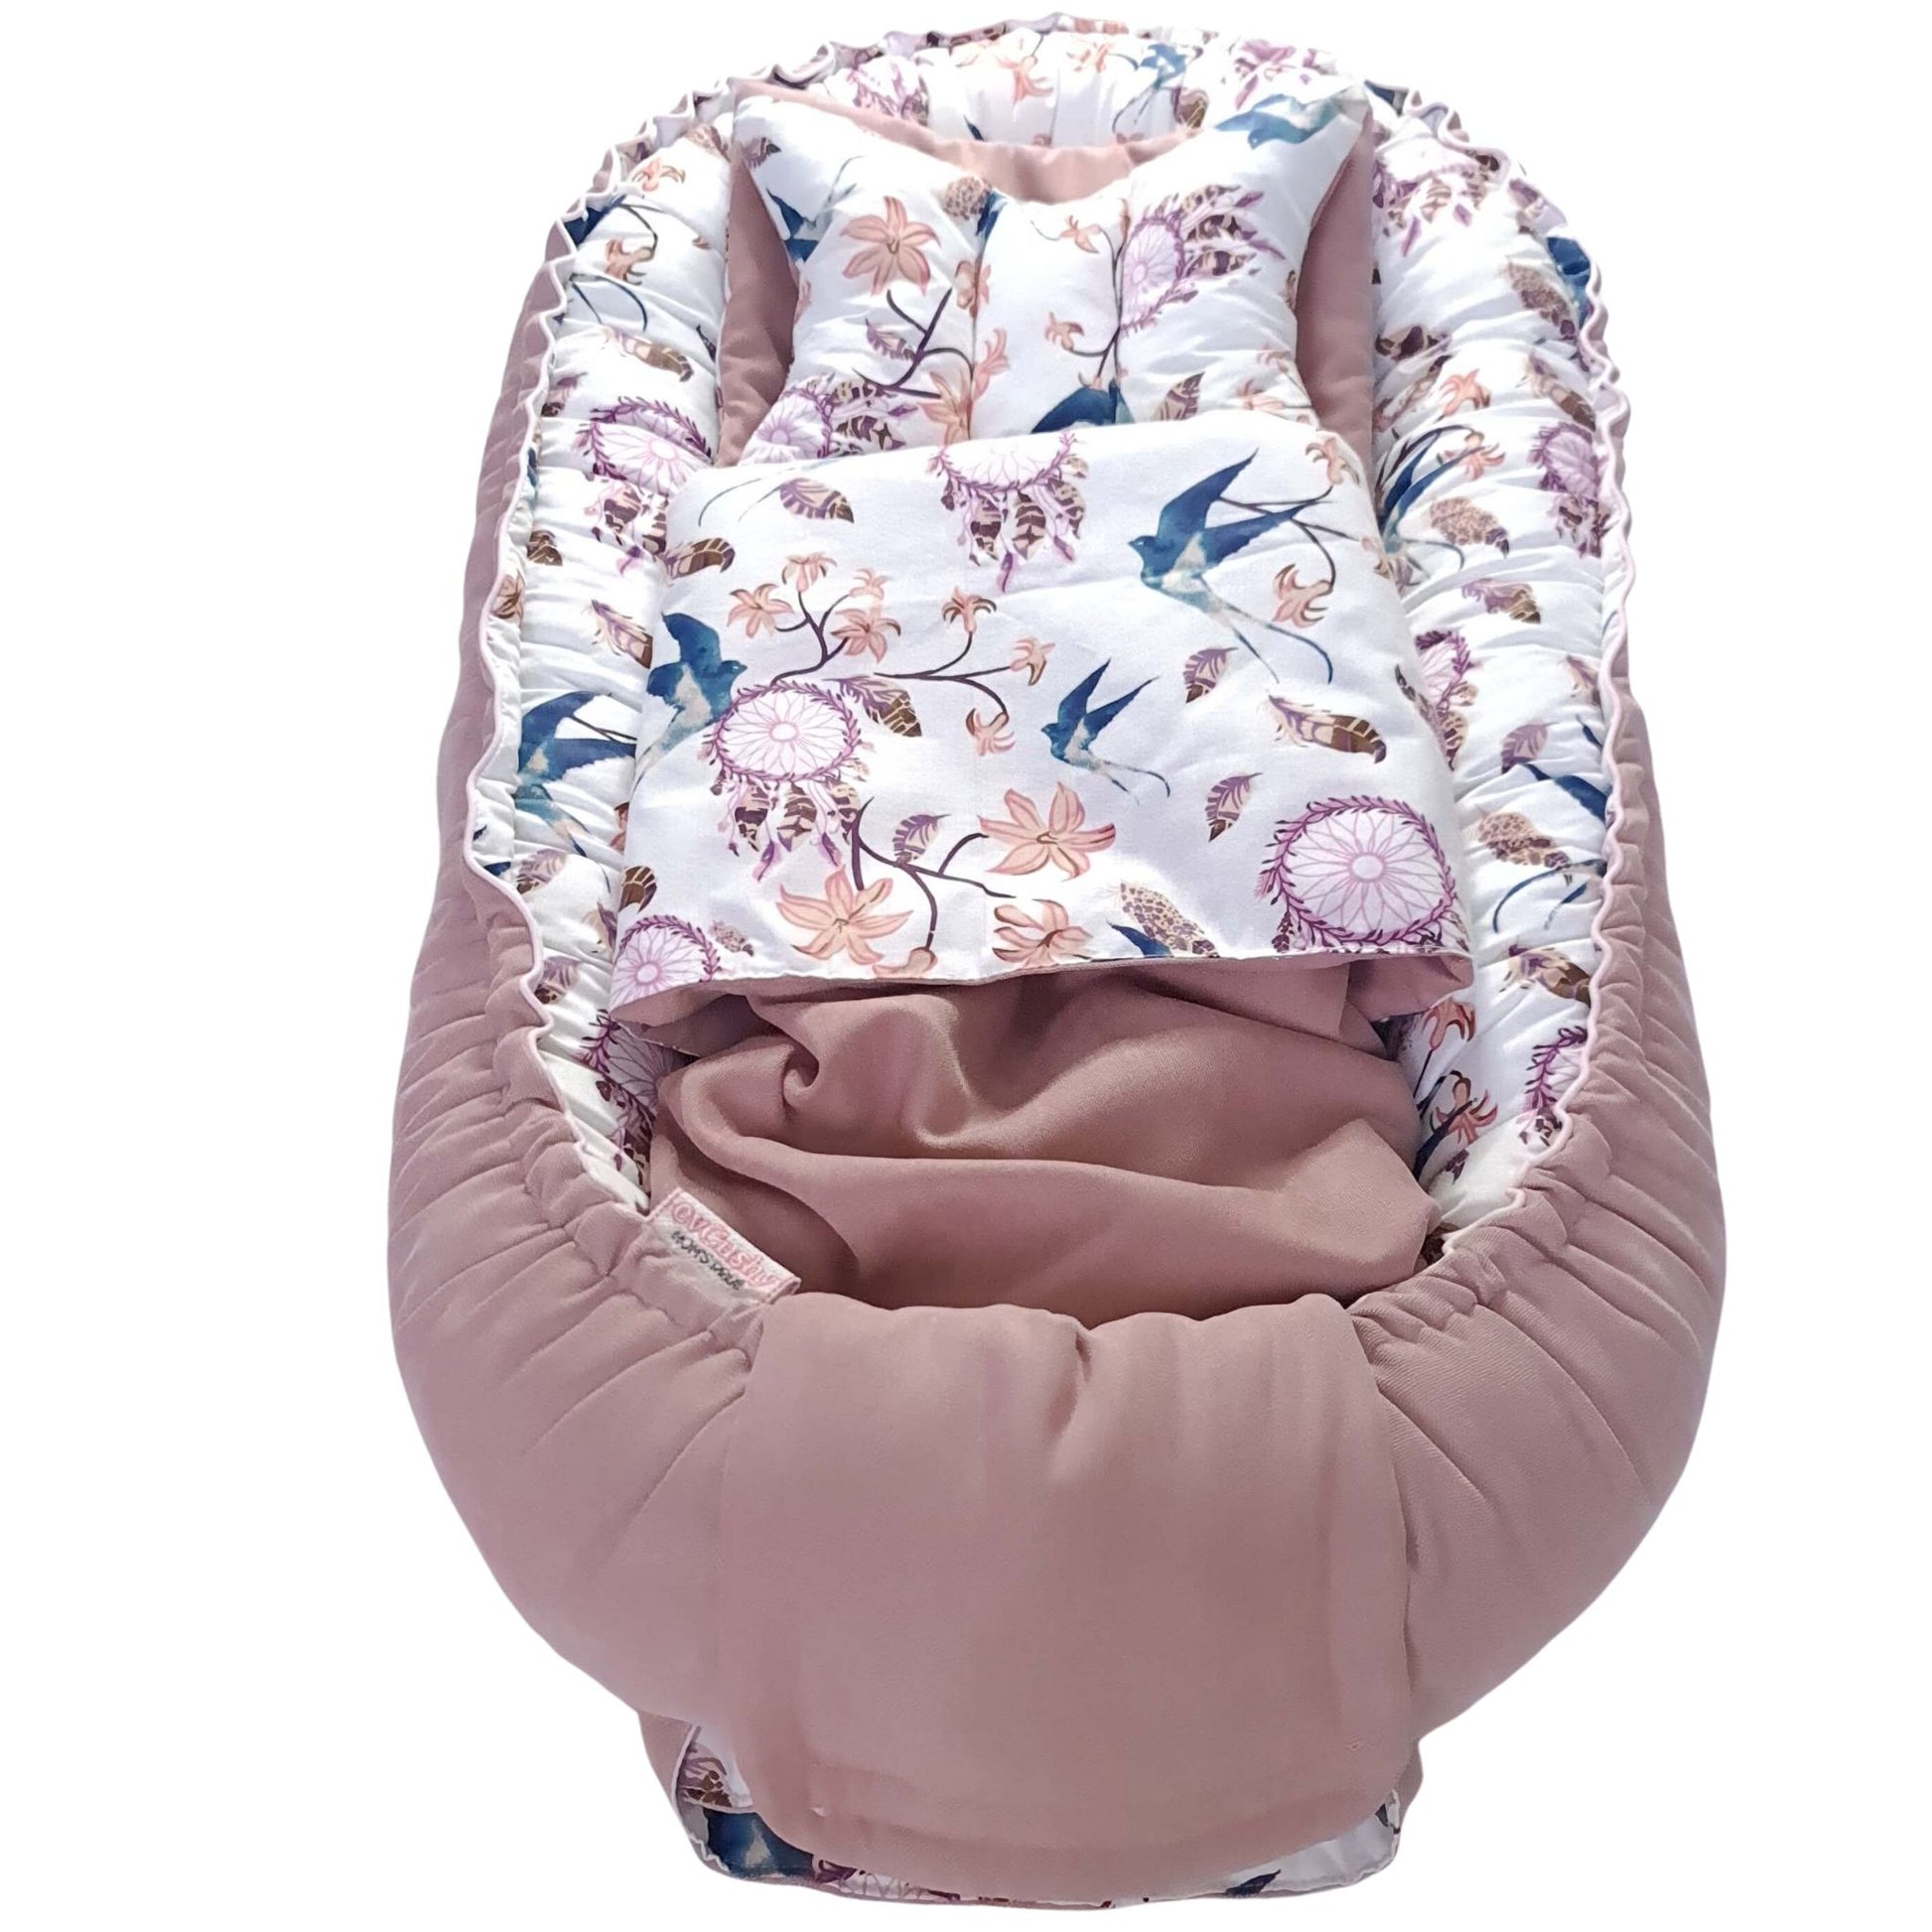 baby nest for newborn cosy cushion sleep pod lounger